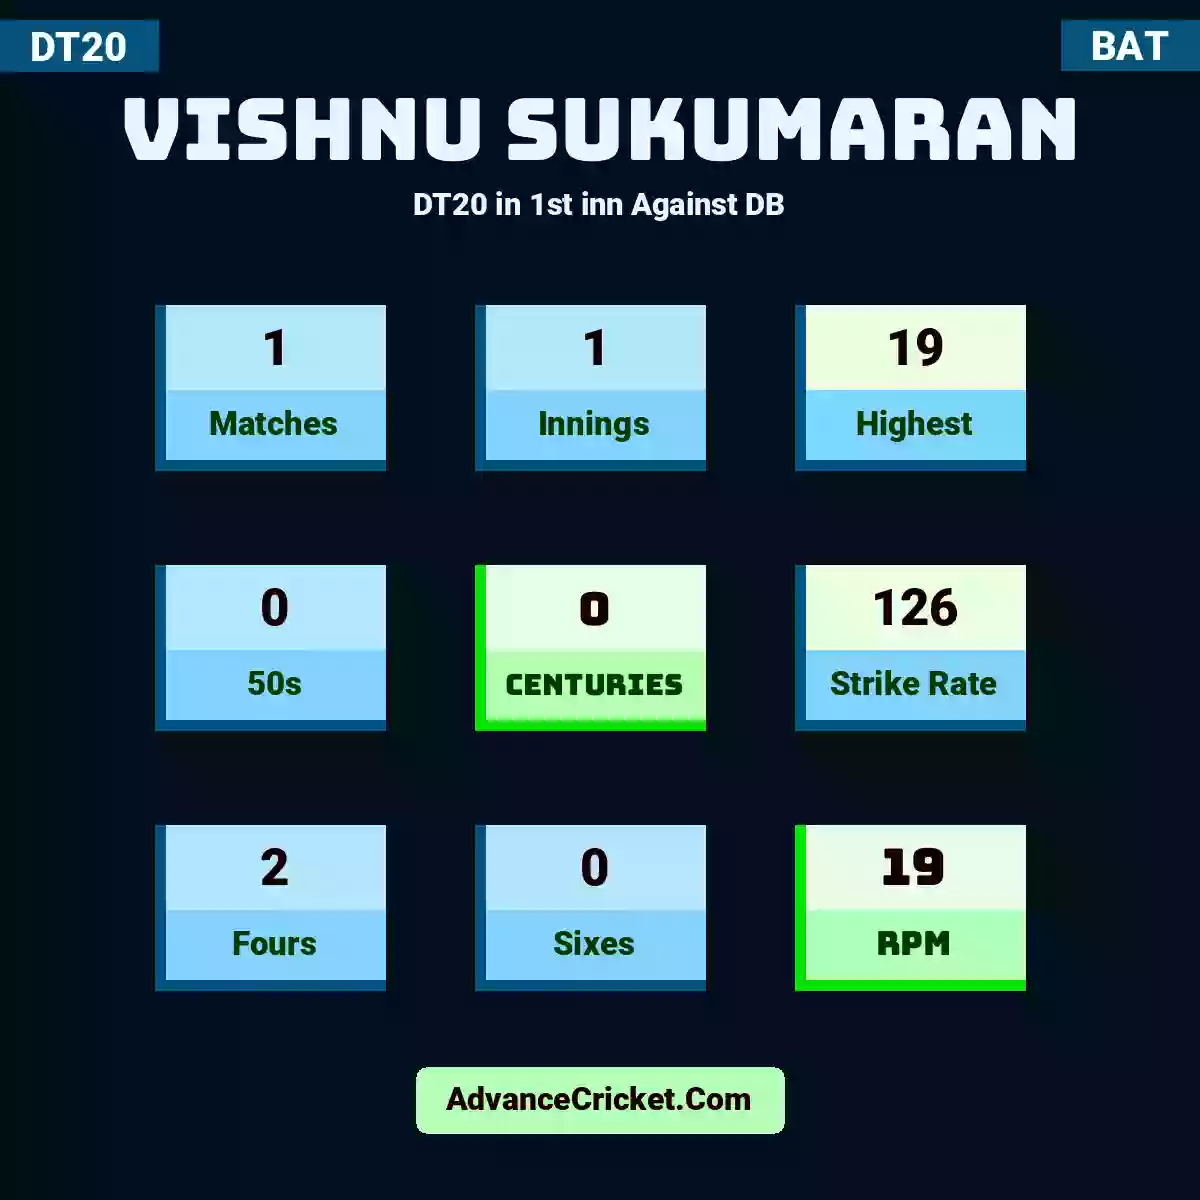 Vishnu Sukumaran DT20  in 1st inn Against DB, Vishnu Sukumaran played 1 matches, scored 19 runs as highest, 0 half-centuries, and 0 centuries, with a strike rate of 126. V.Sukumaran hit 2 fours and 0 sixes, with an RPM of 19.